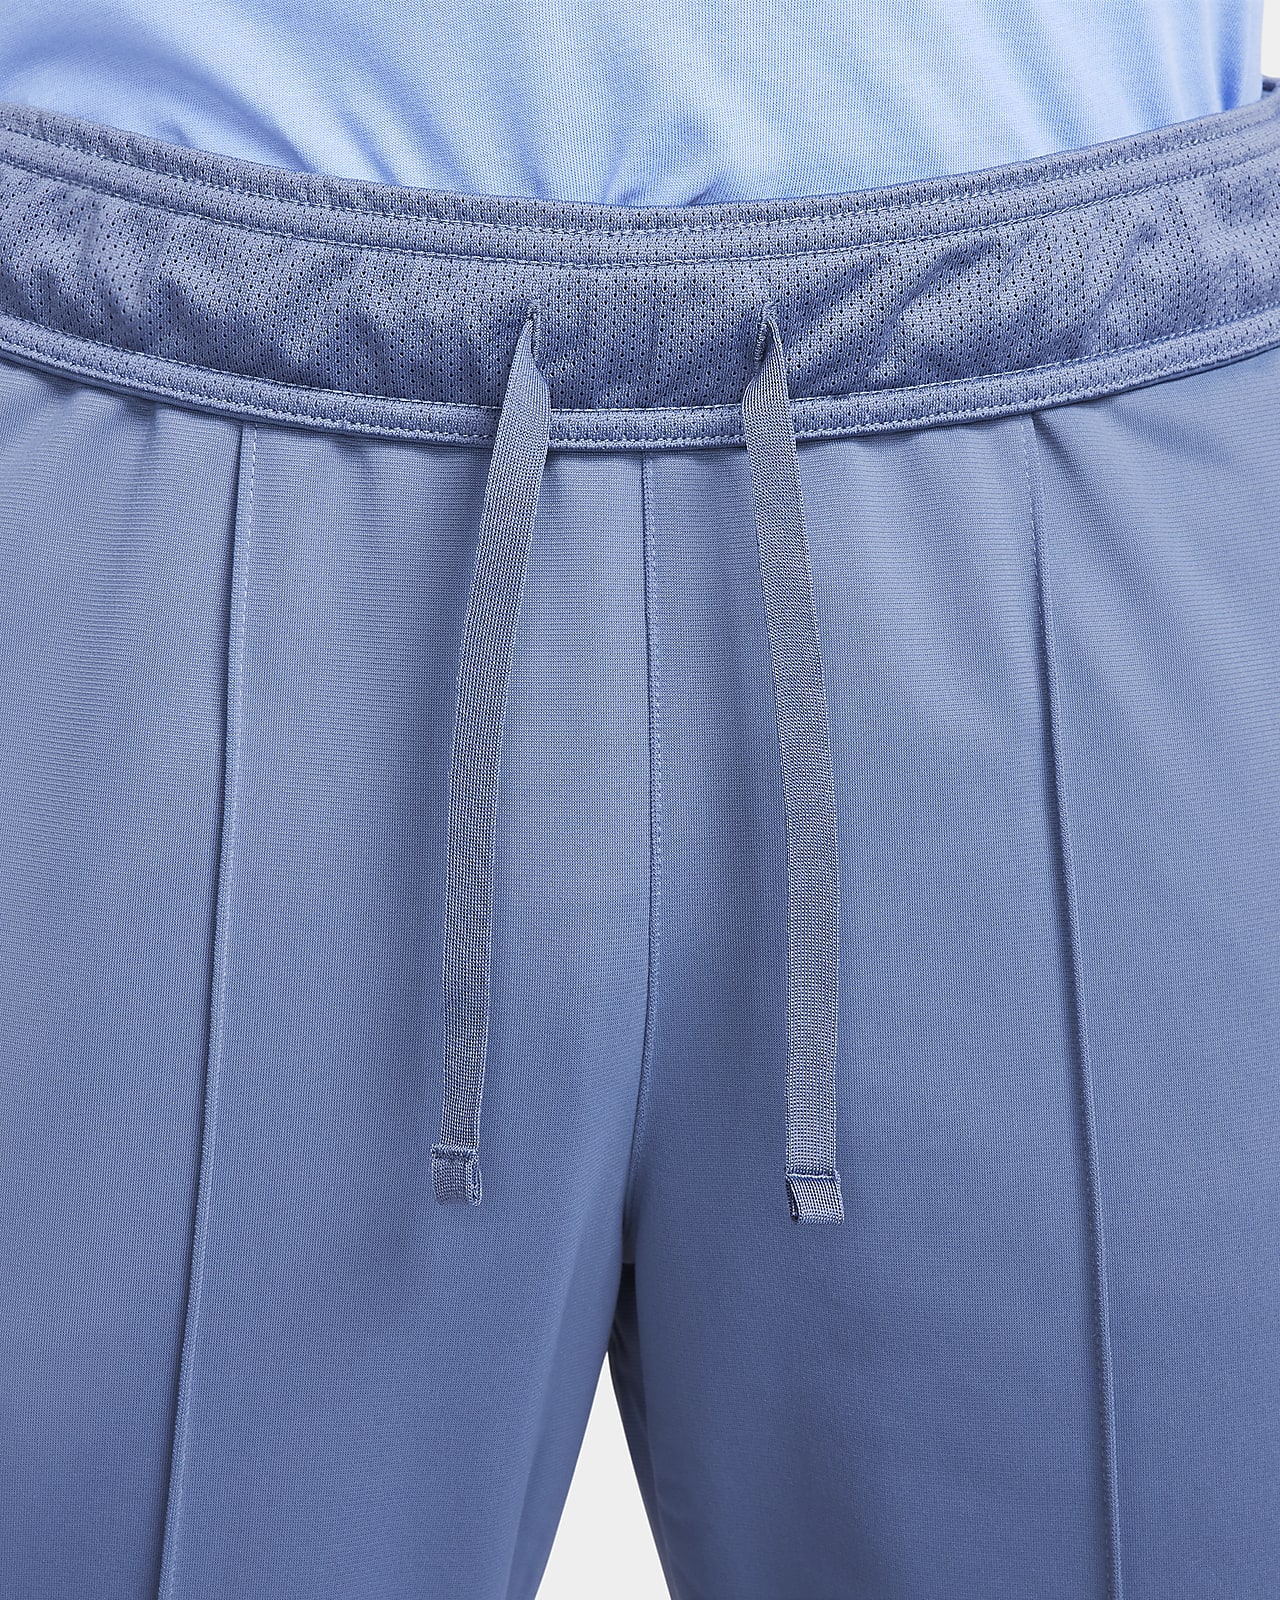 NikeCourt Men's Tennis Pants.